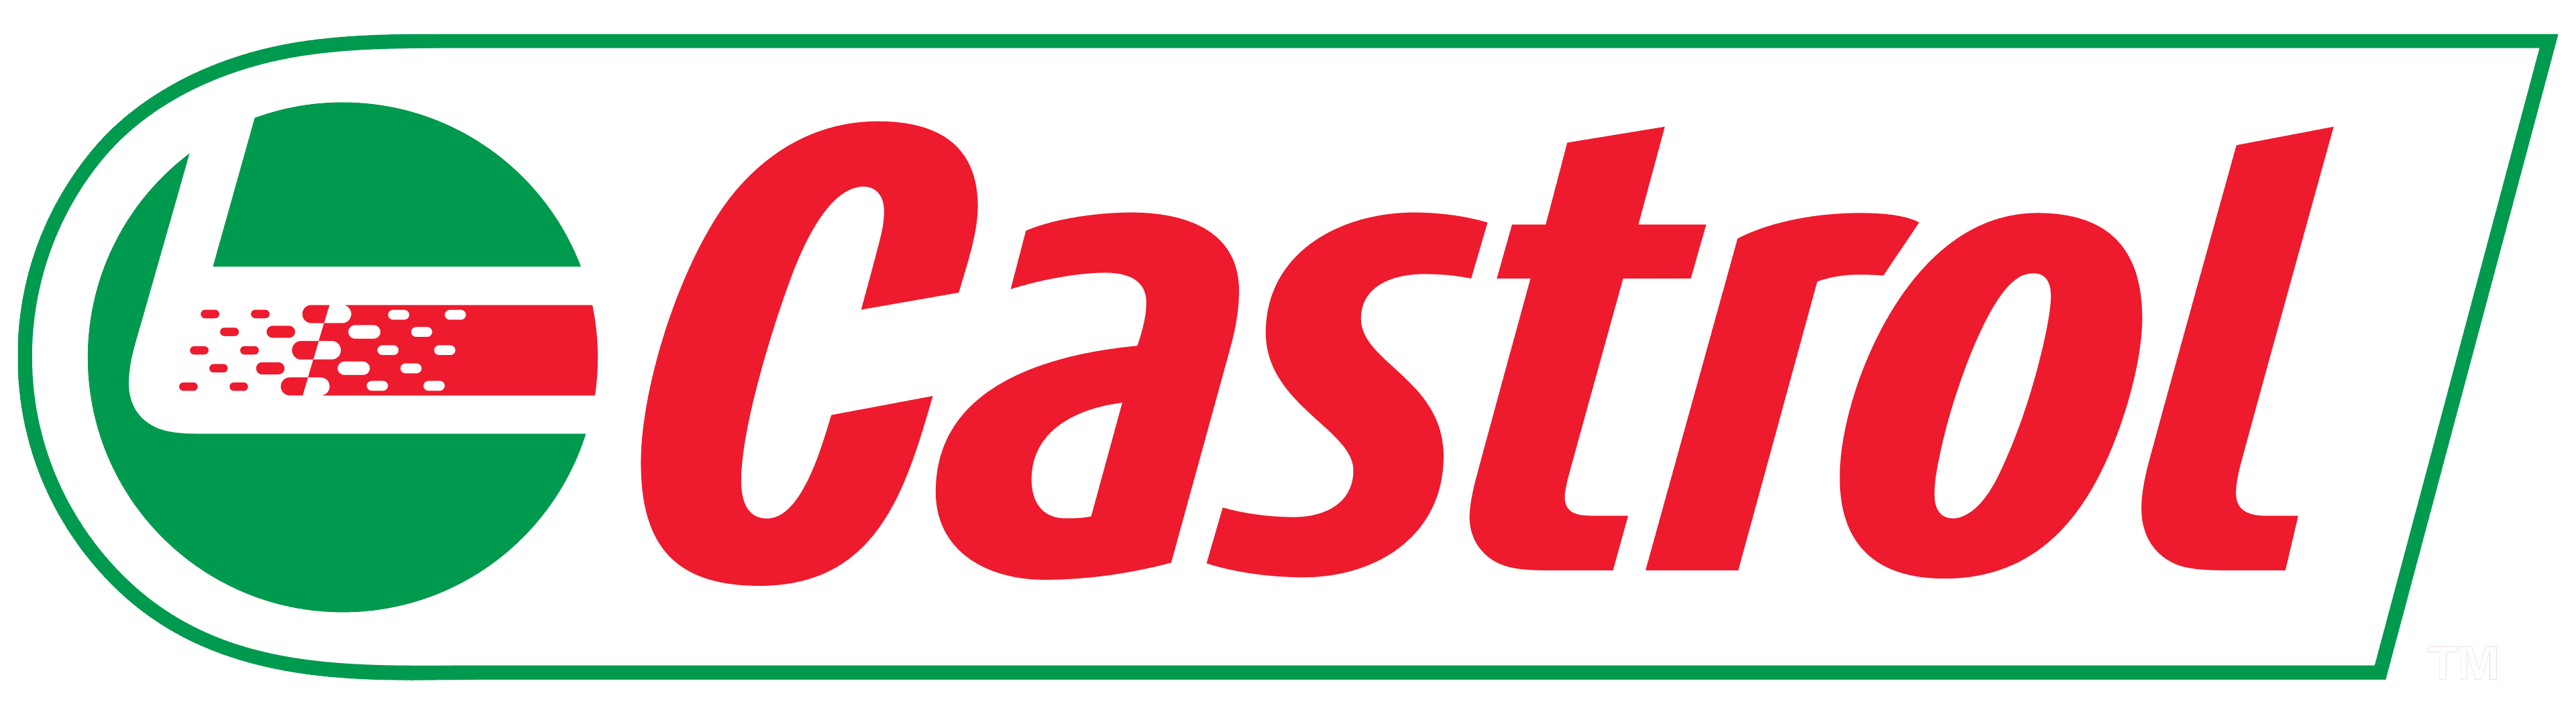 Castrol-Logo-2006